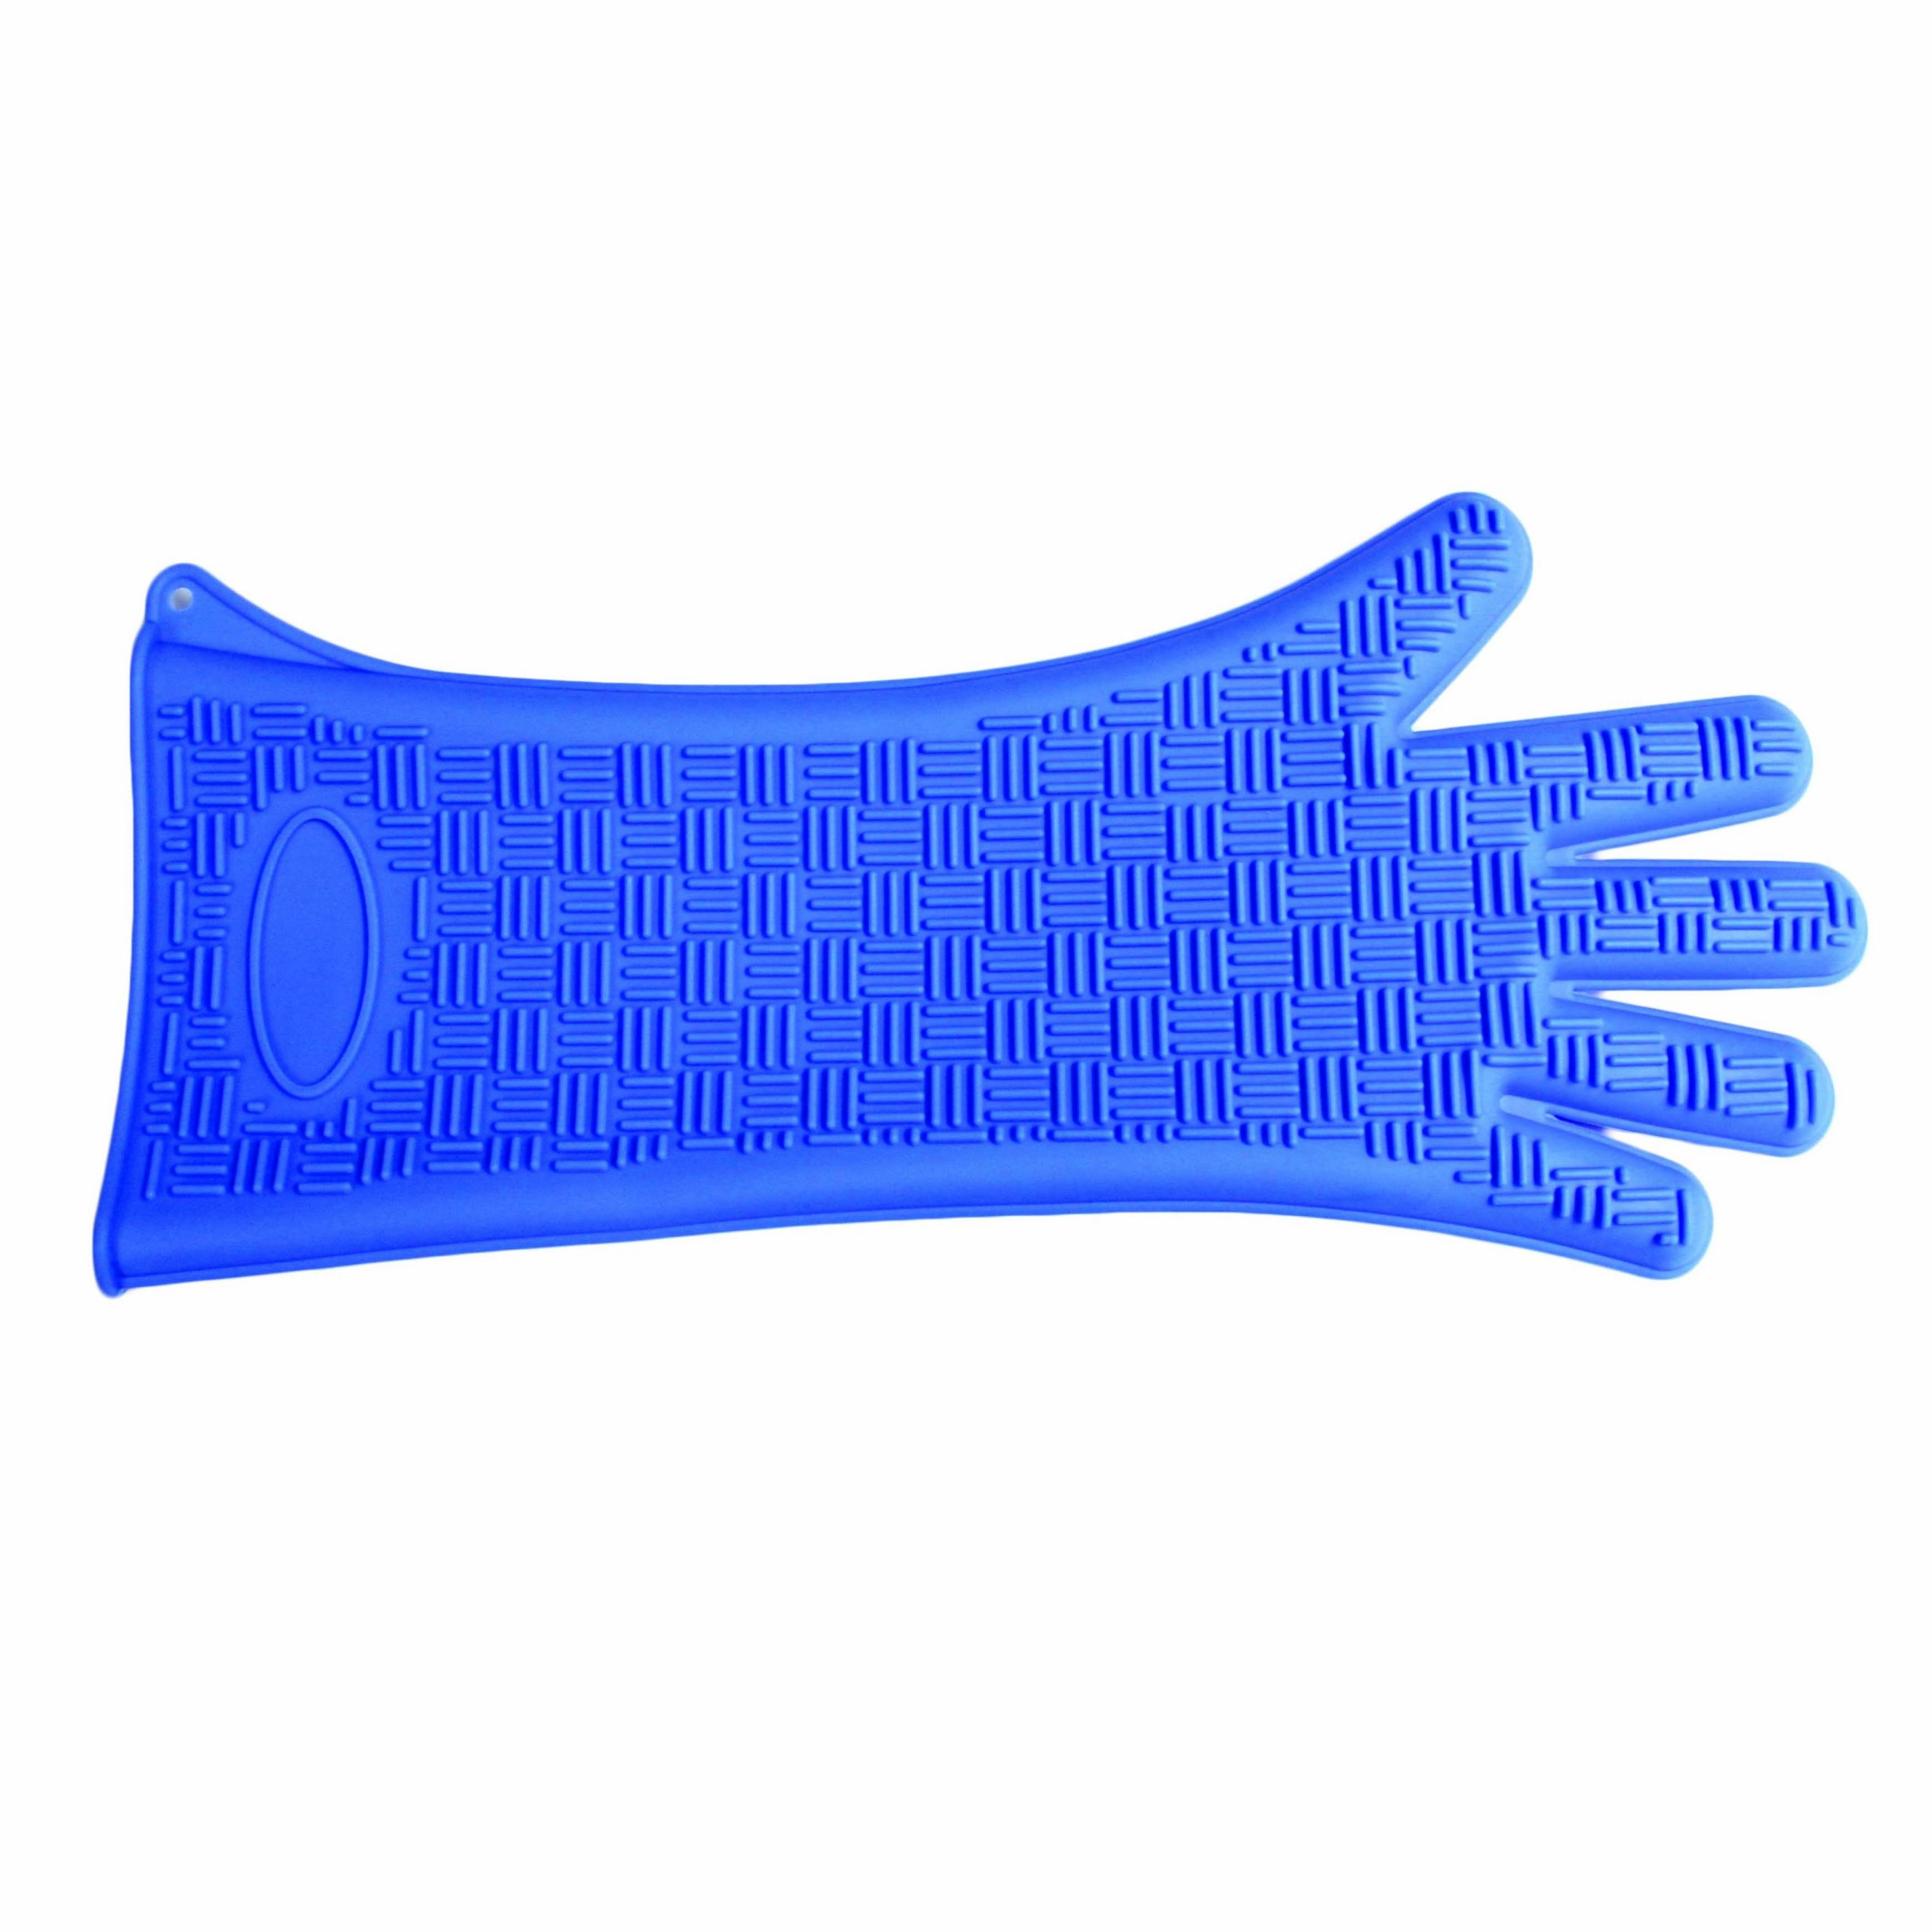 Instrument Care - Silicone Heat Glove - Healthmark Industries